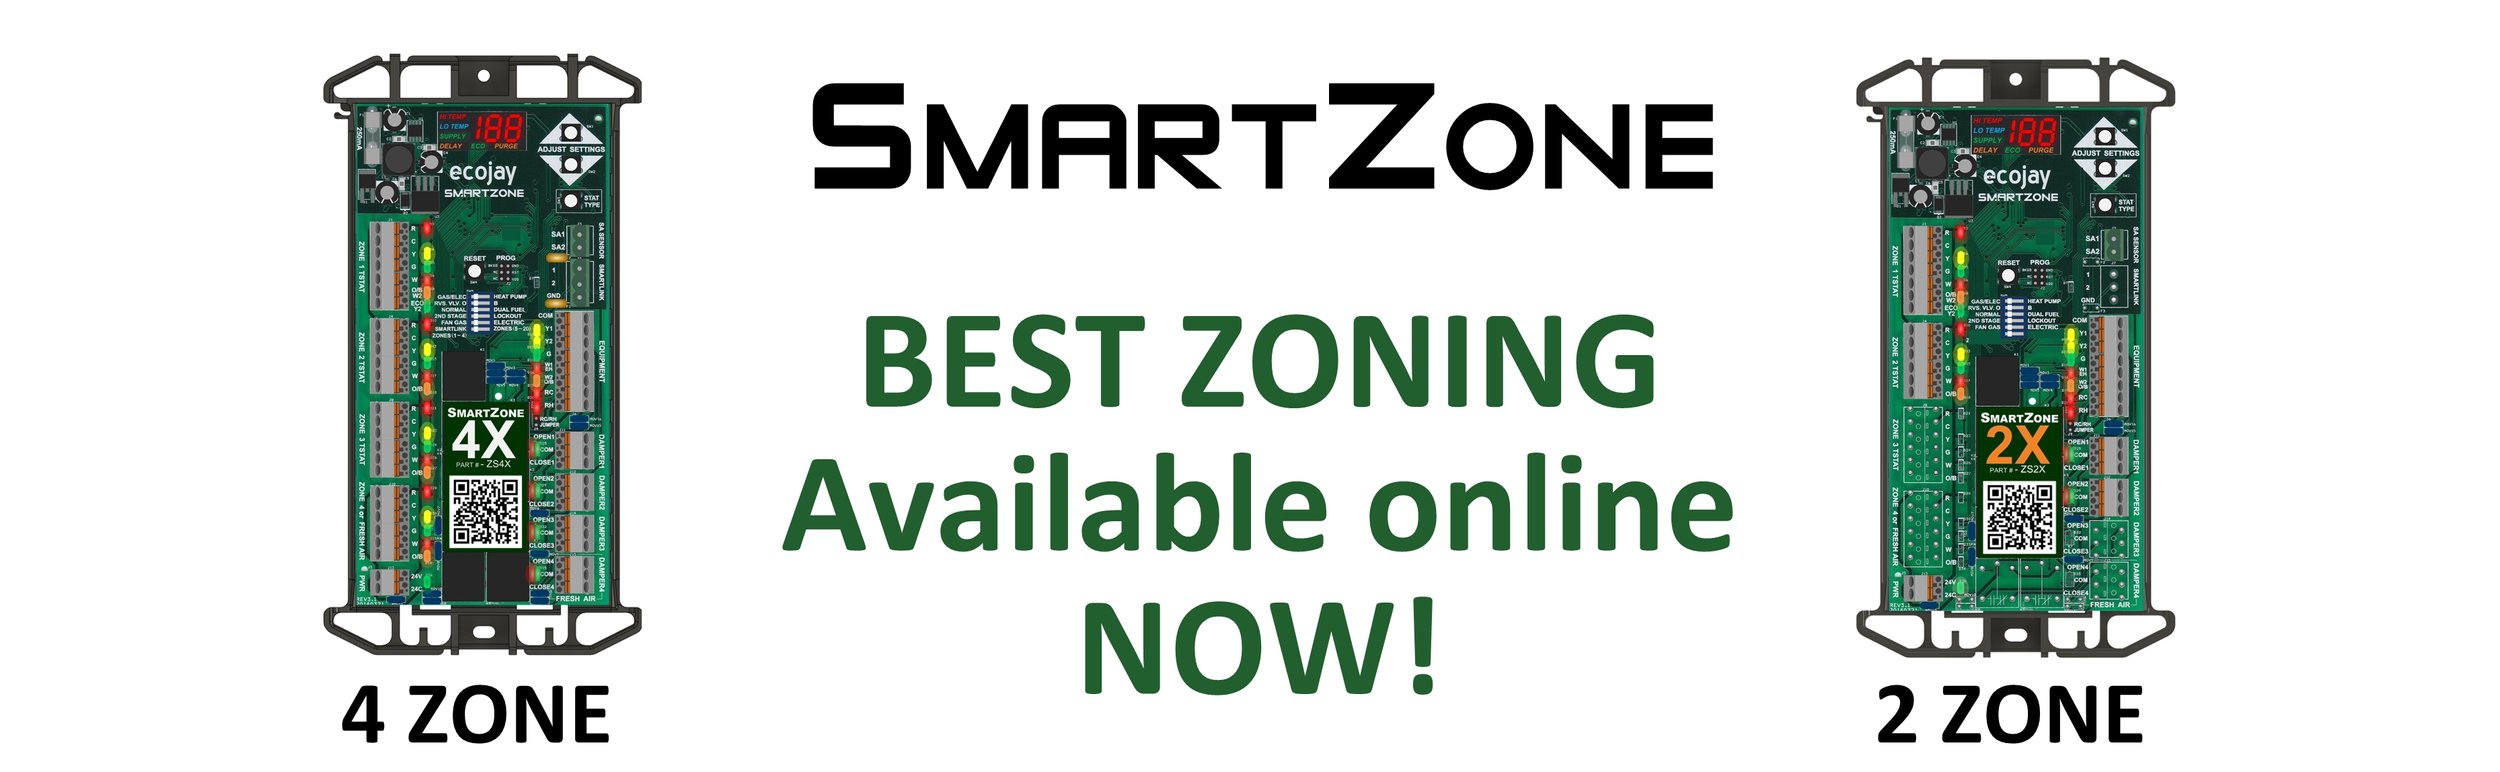 ecojay smartzone best graphic 01.jpg